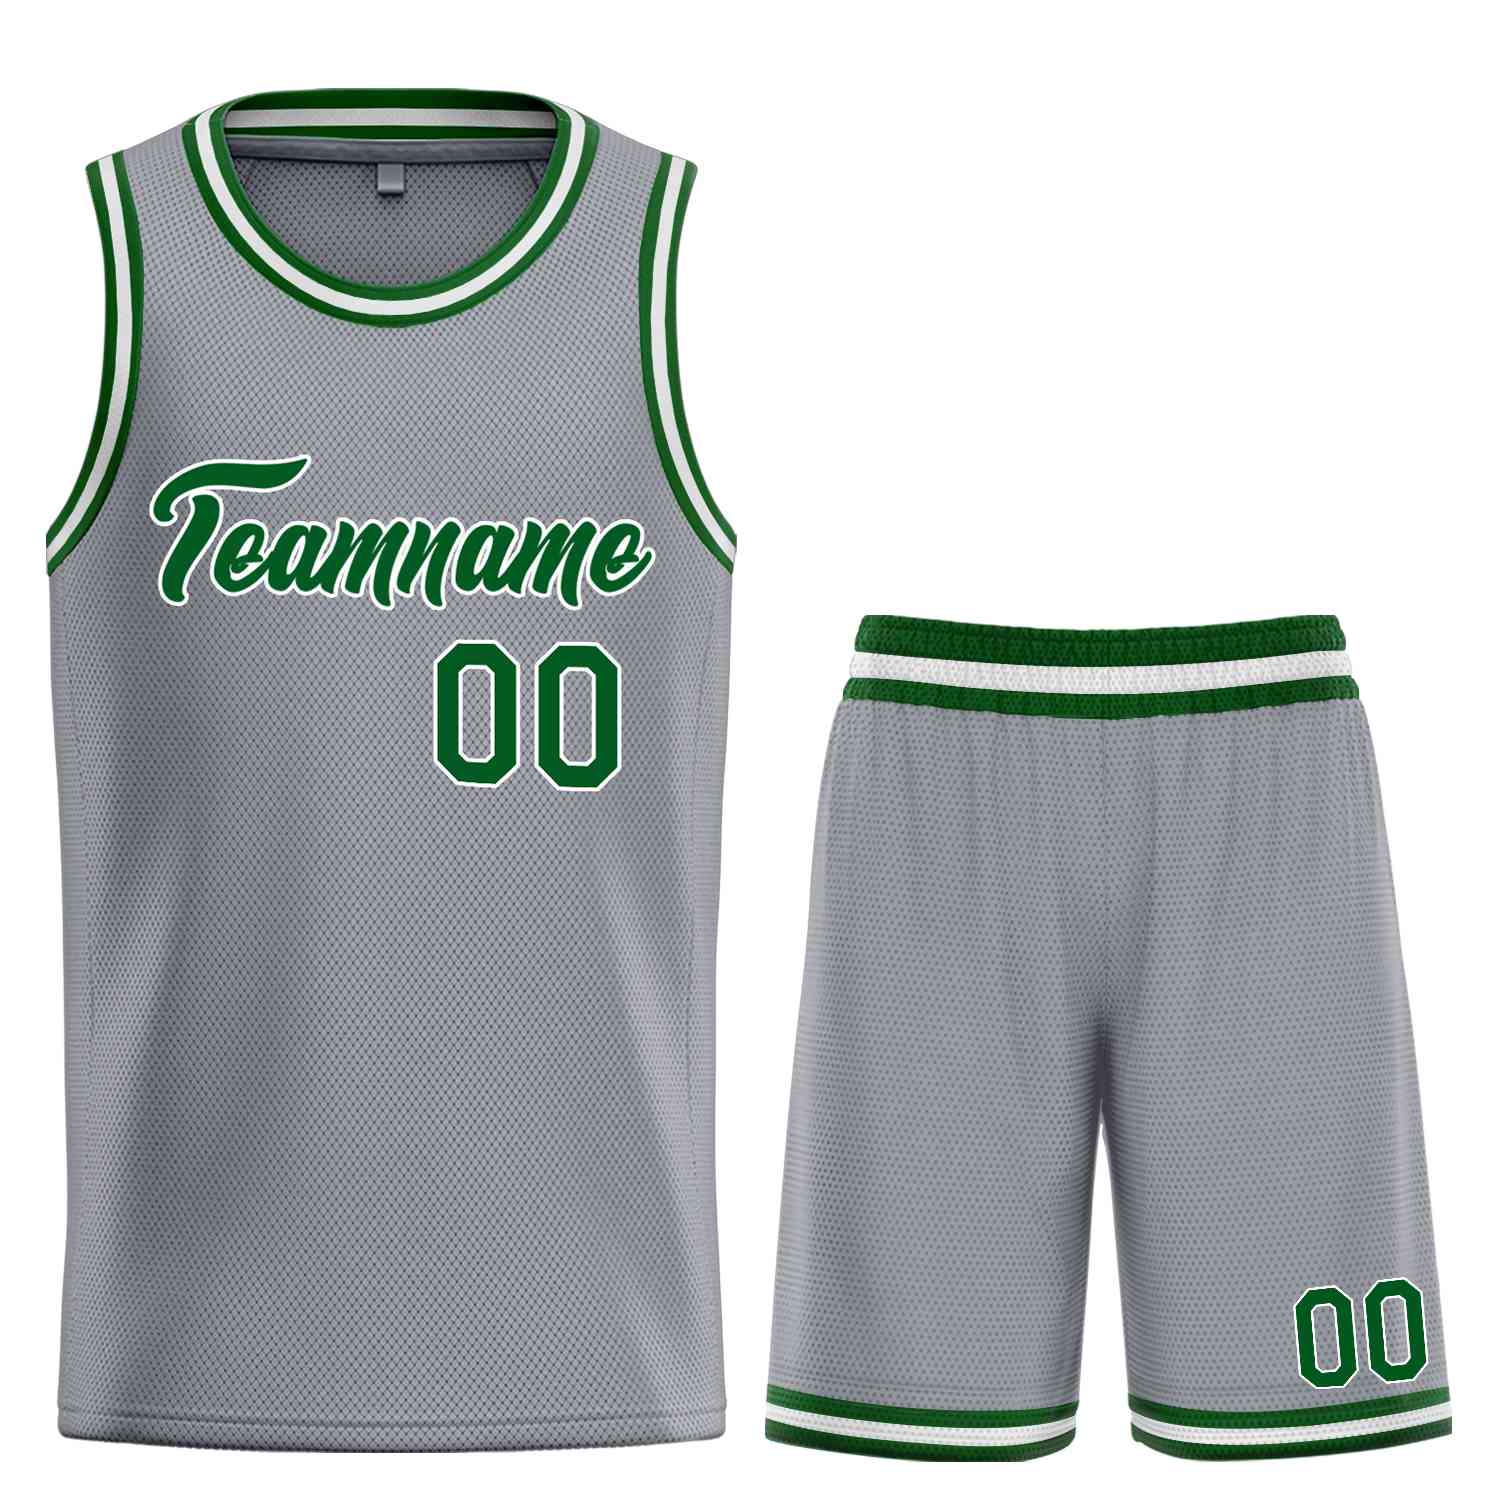 CHICAGO SKYHAWKS Black Green Grey and White Basketball Uniforms